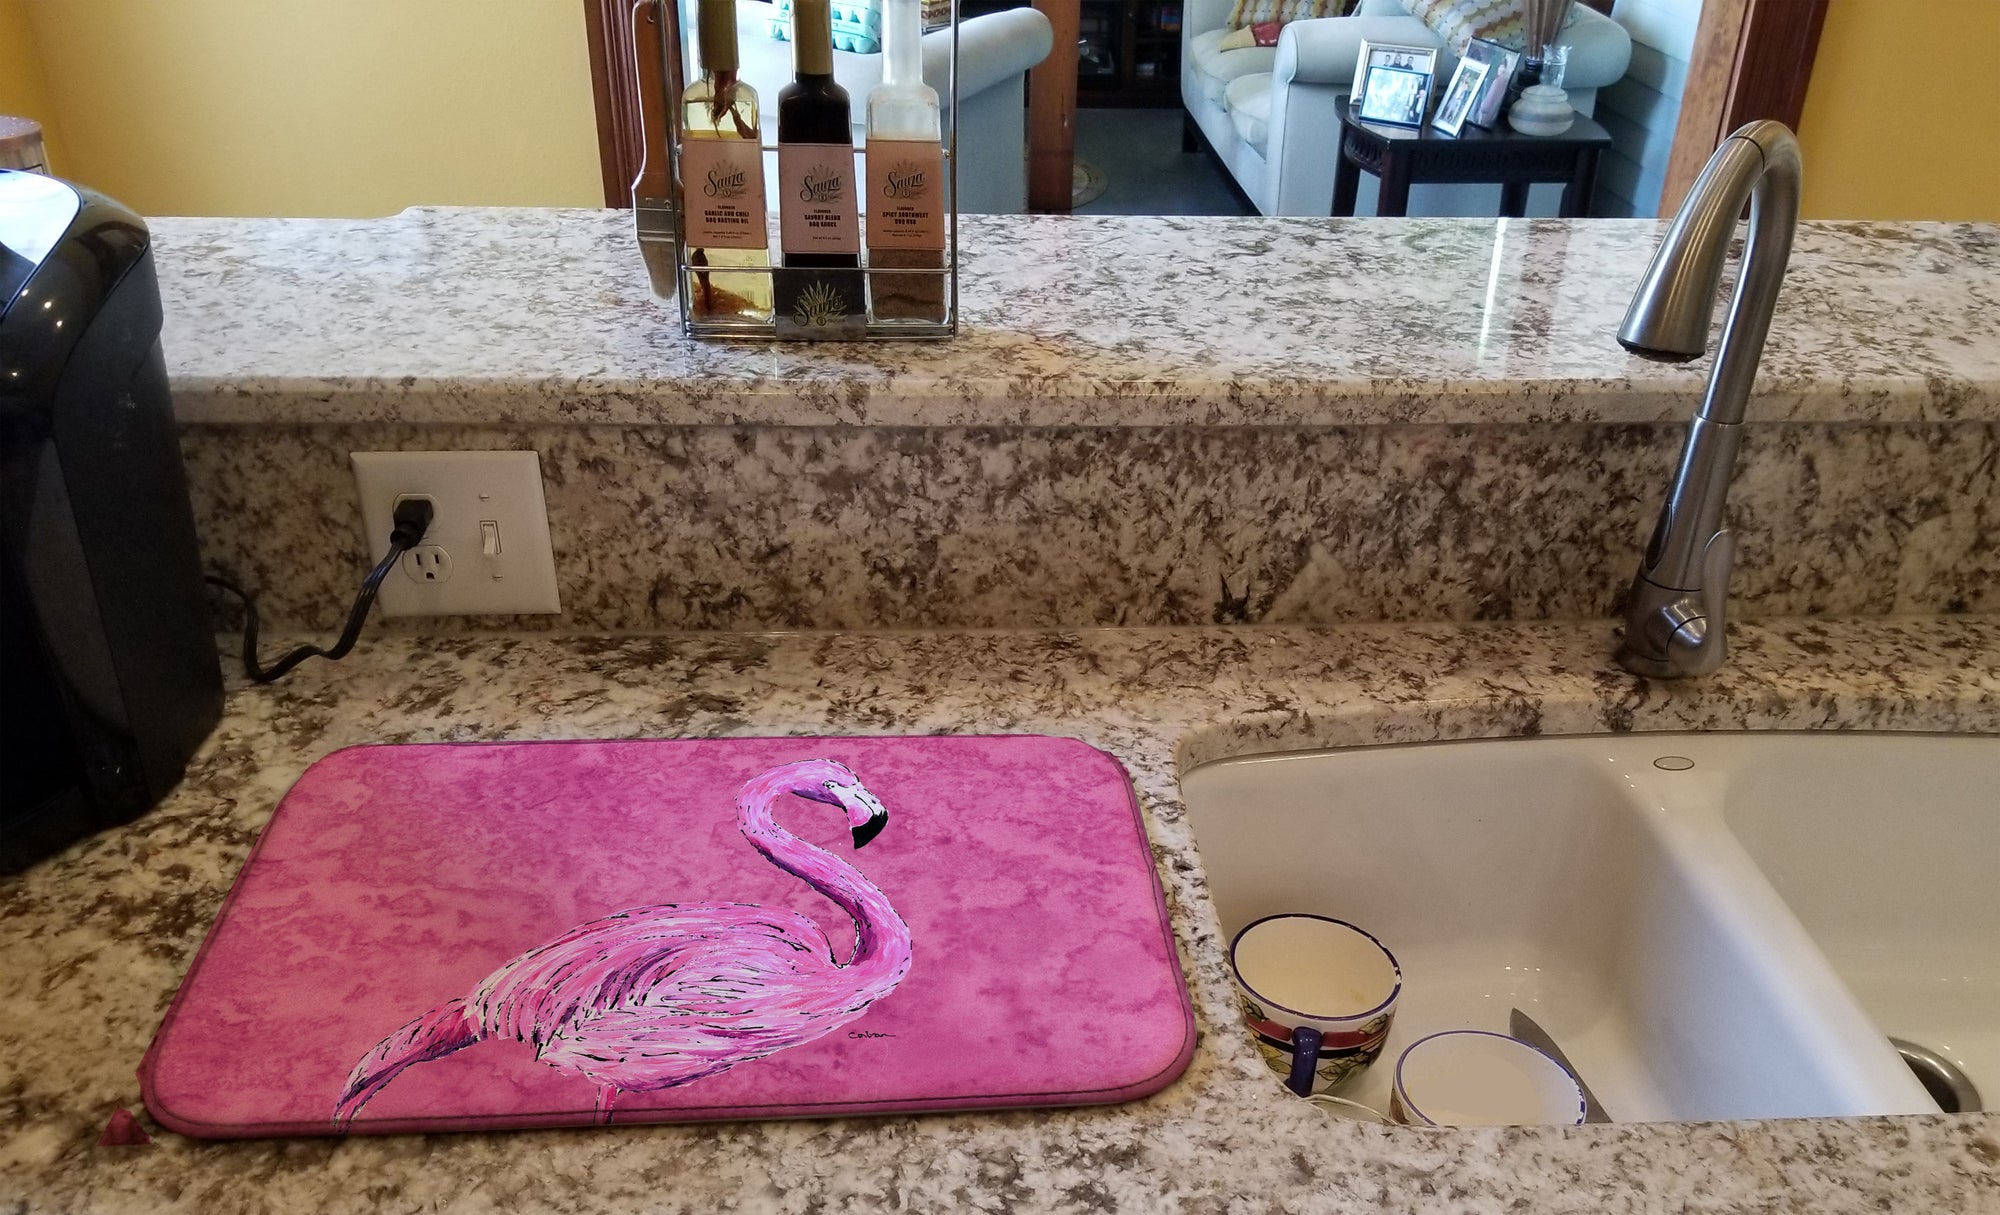 Flamingo on Pink Dish Drying Mat 8875DDM